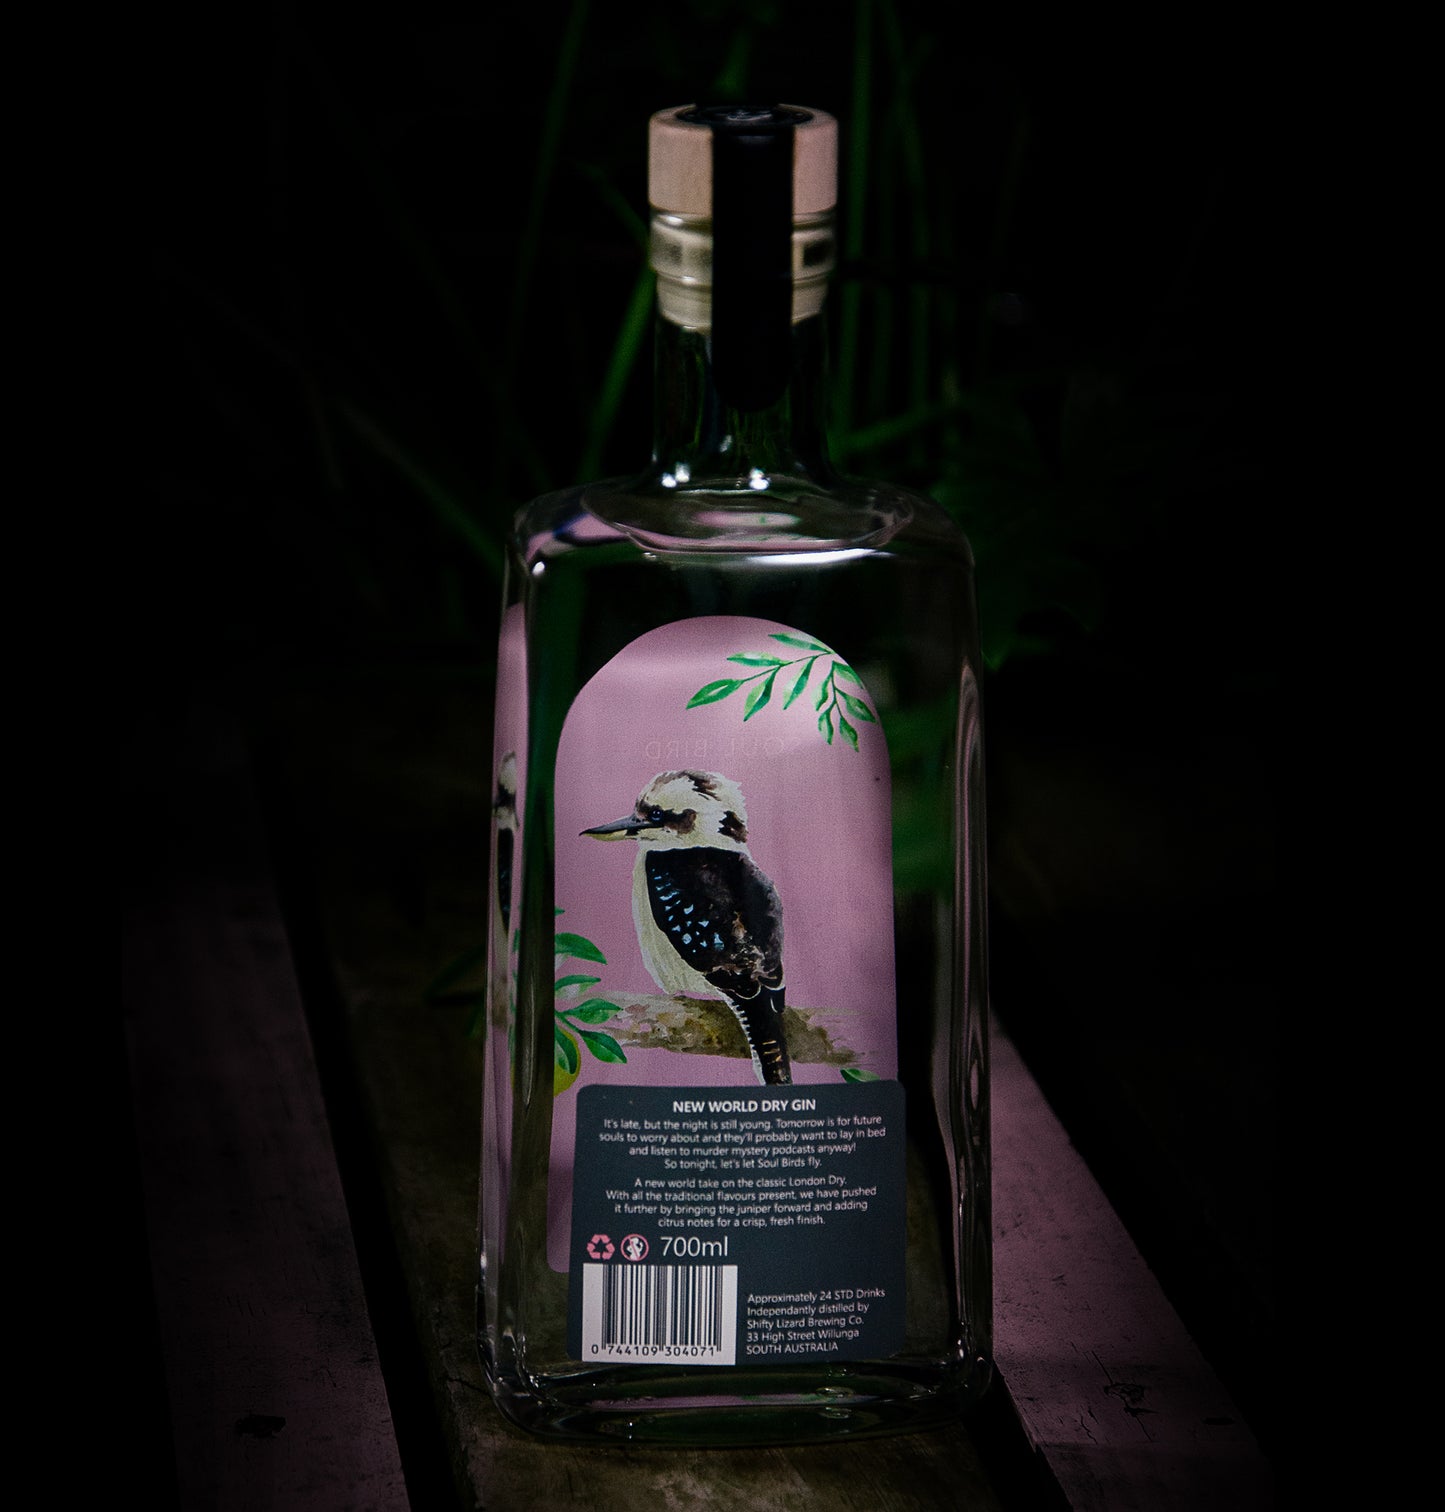 Soul Bird - New World Dry Gin